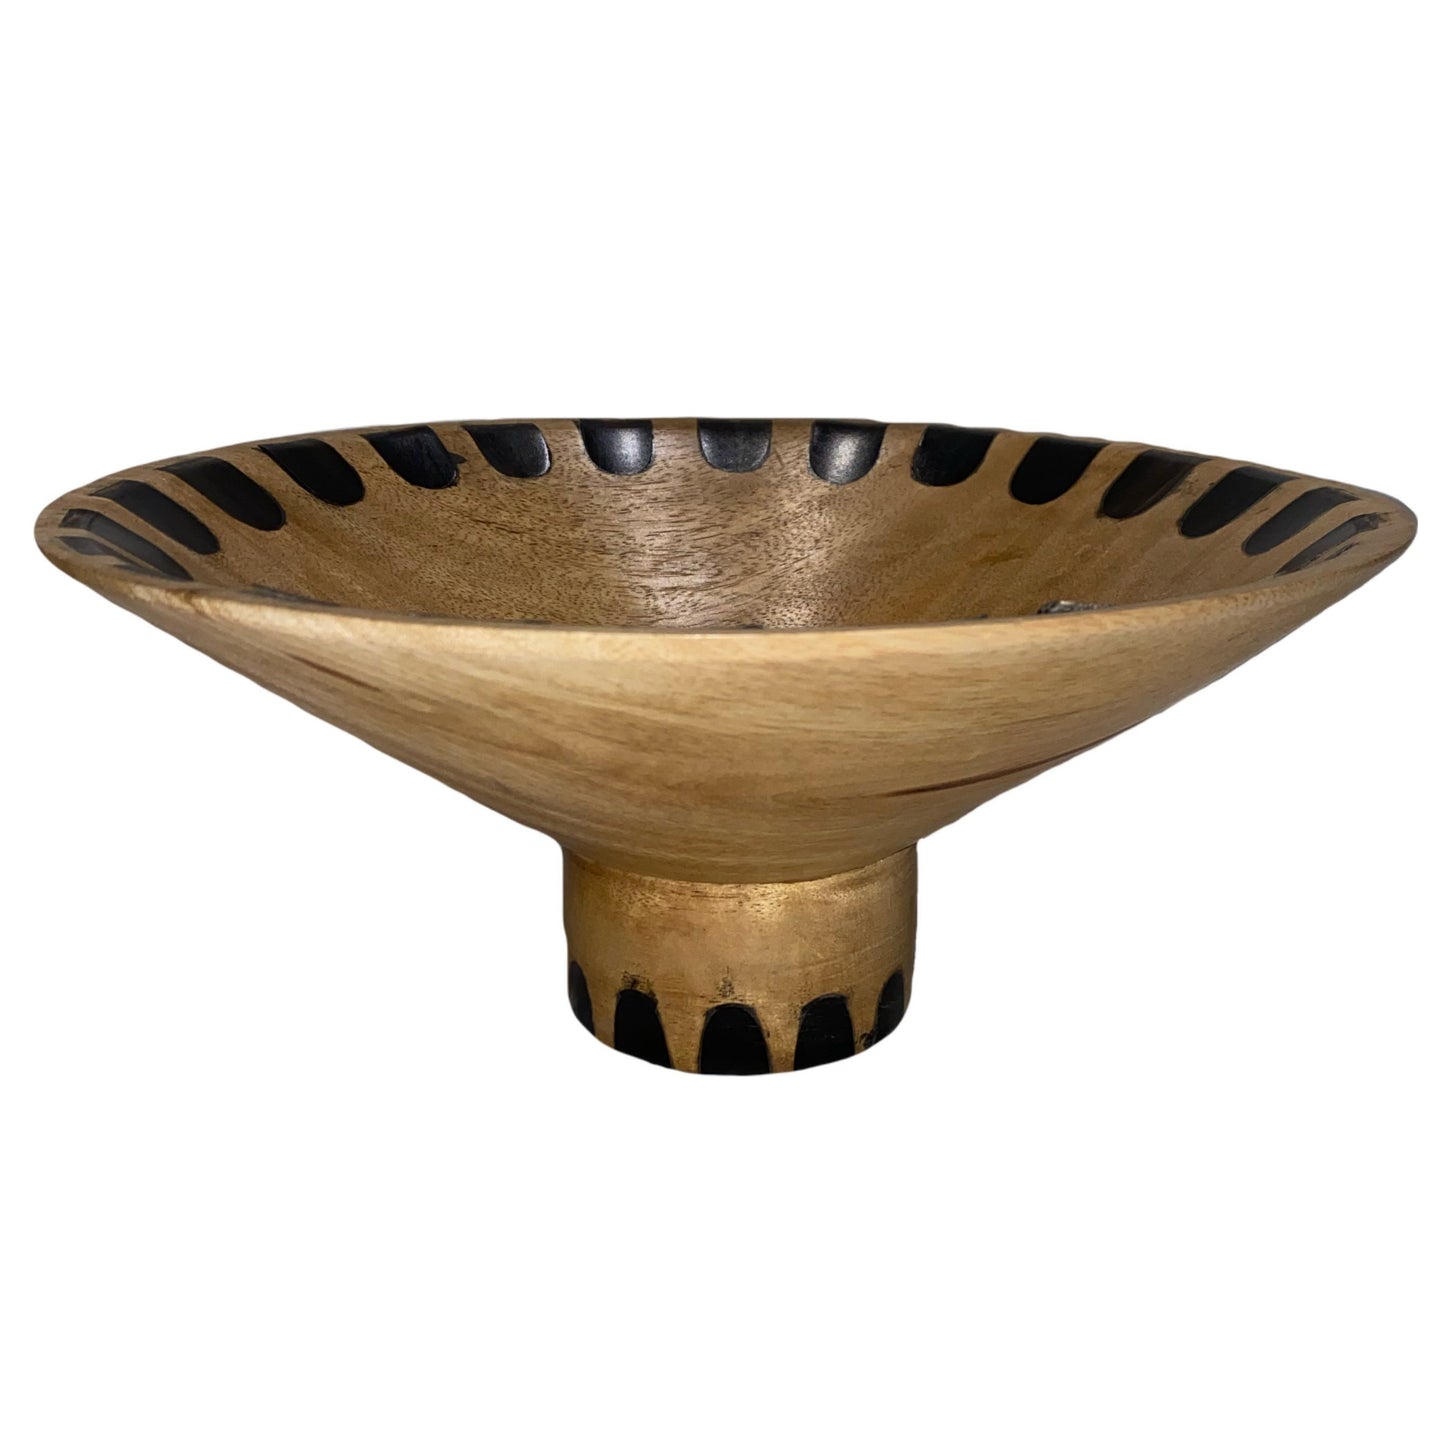 Wood & Horn Inlaid Bowl & Planter Set